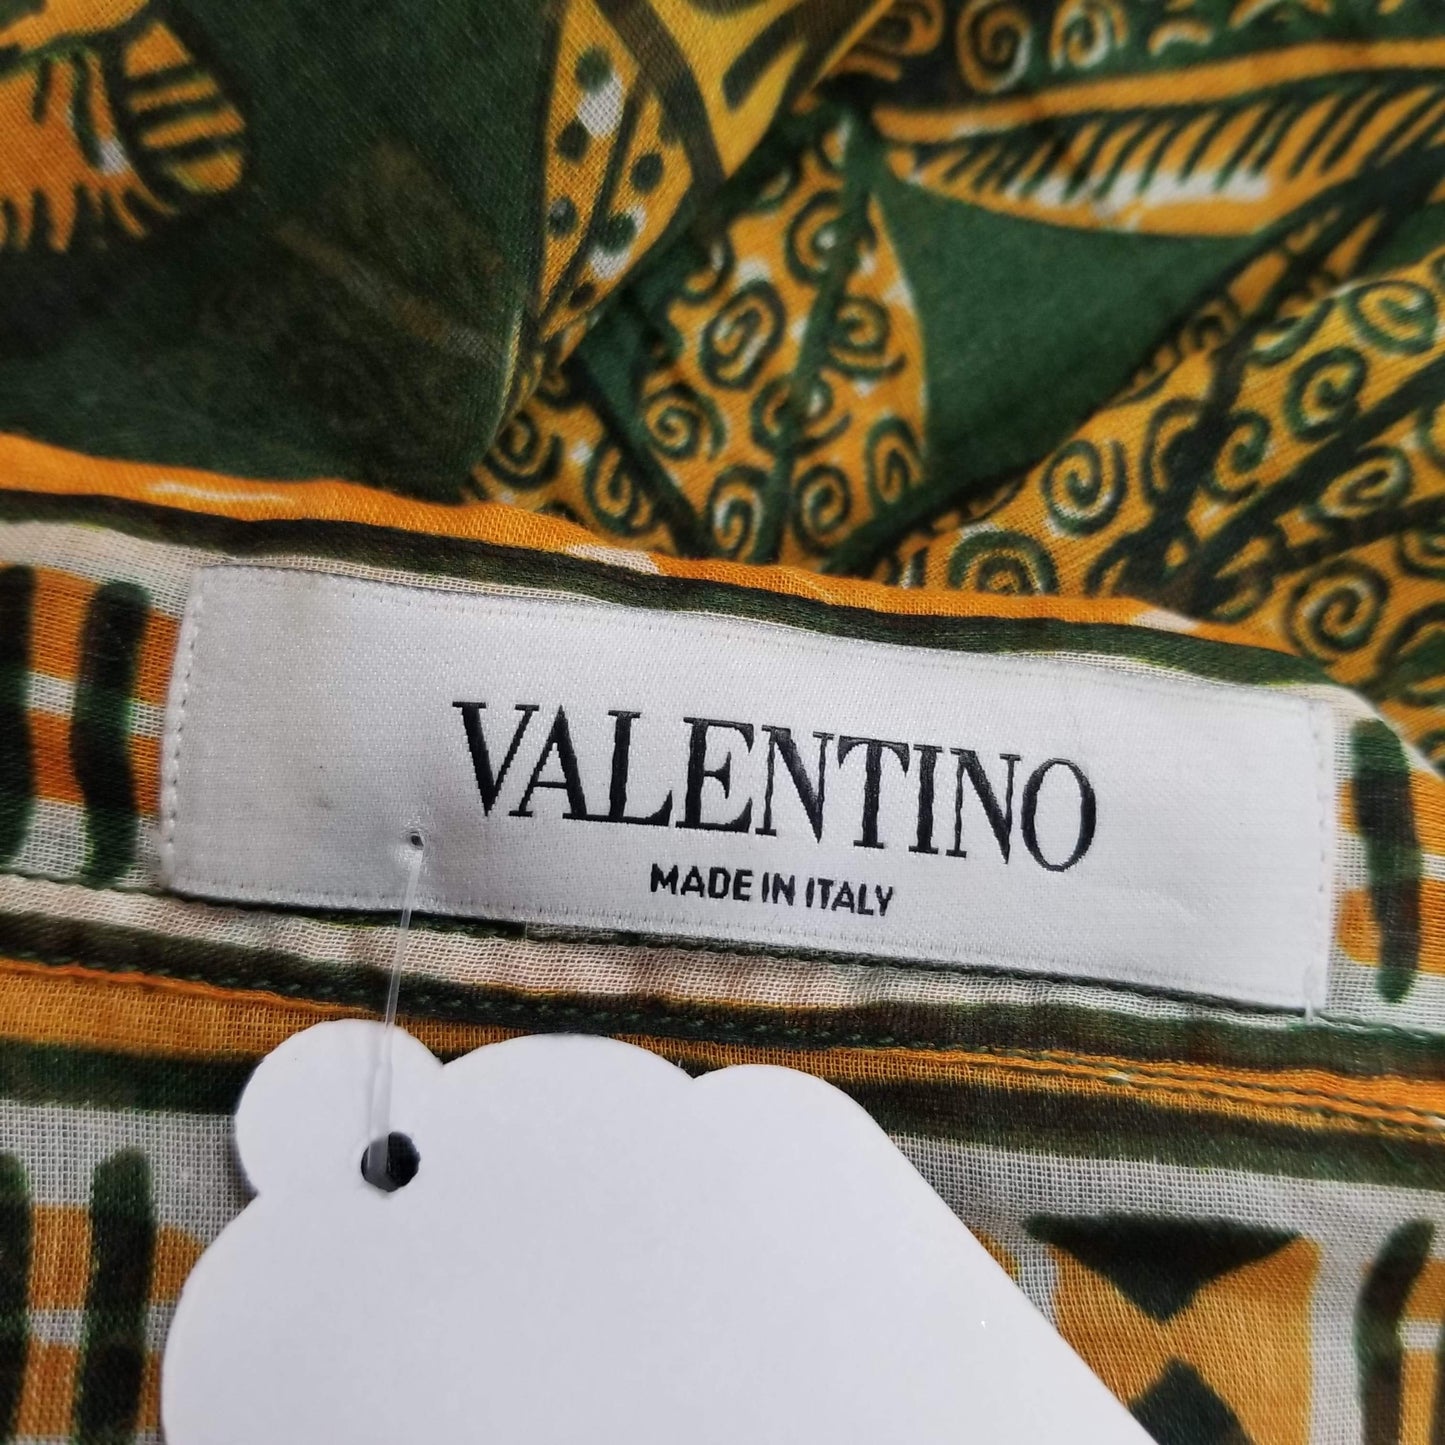 Authentic Valentino Green/Gold Elephant Print Cotton Top Sz 10